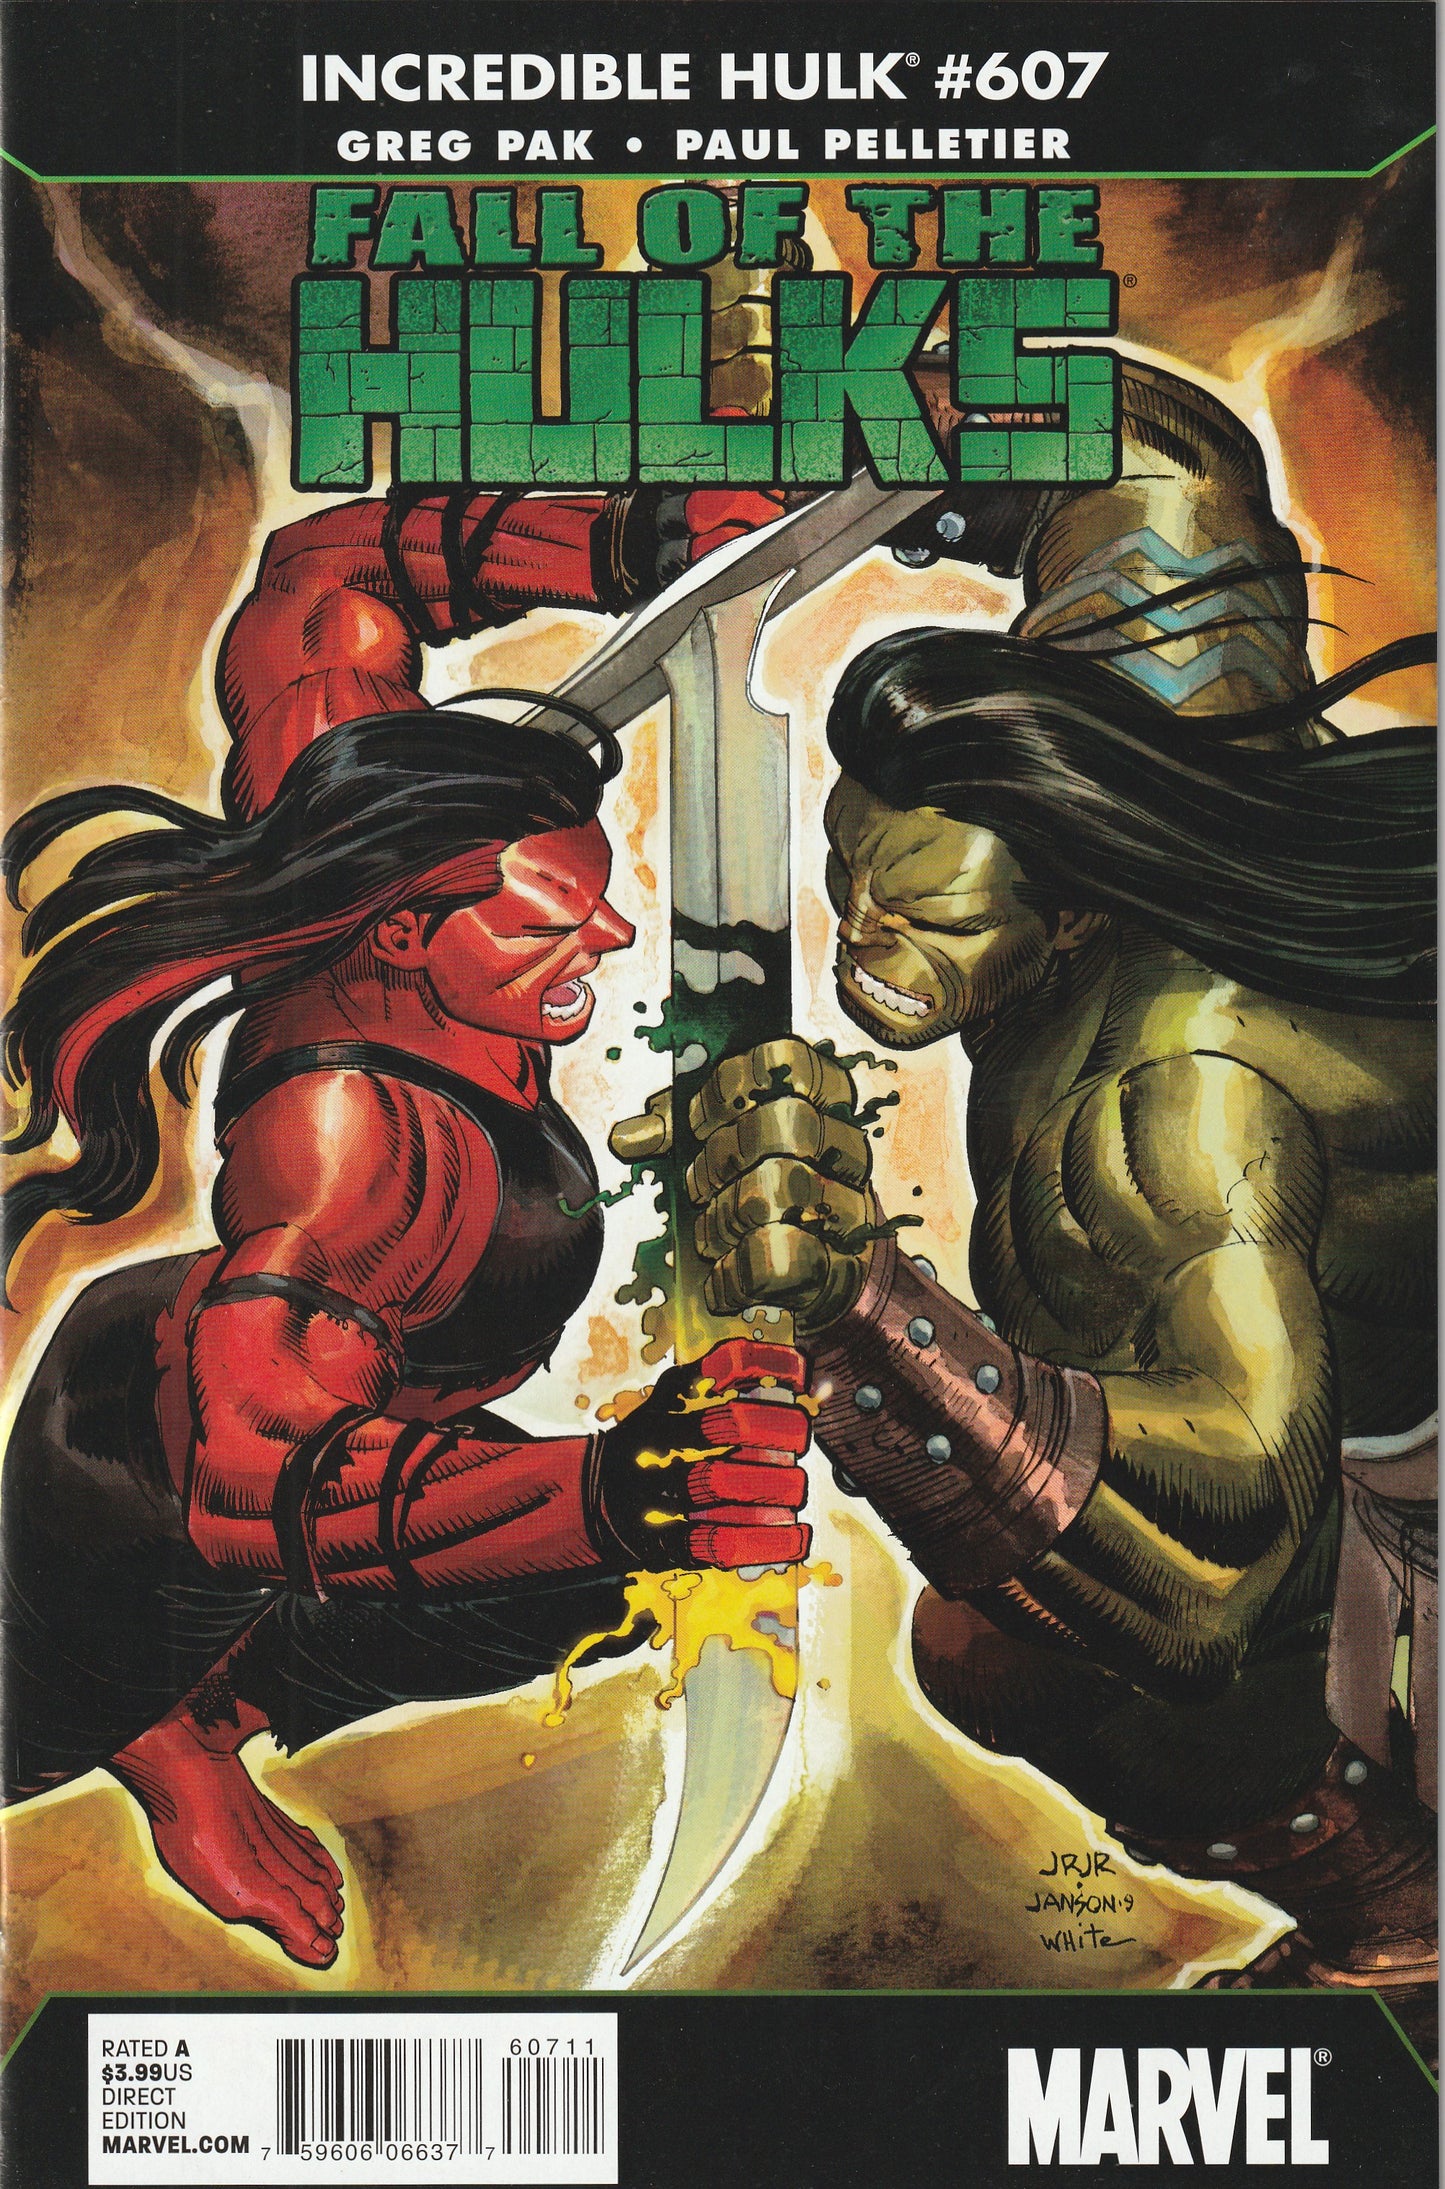 Incredible Hulk #607 (2010) - Fall of the Hulks tie-in